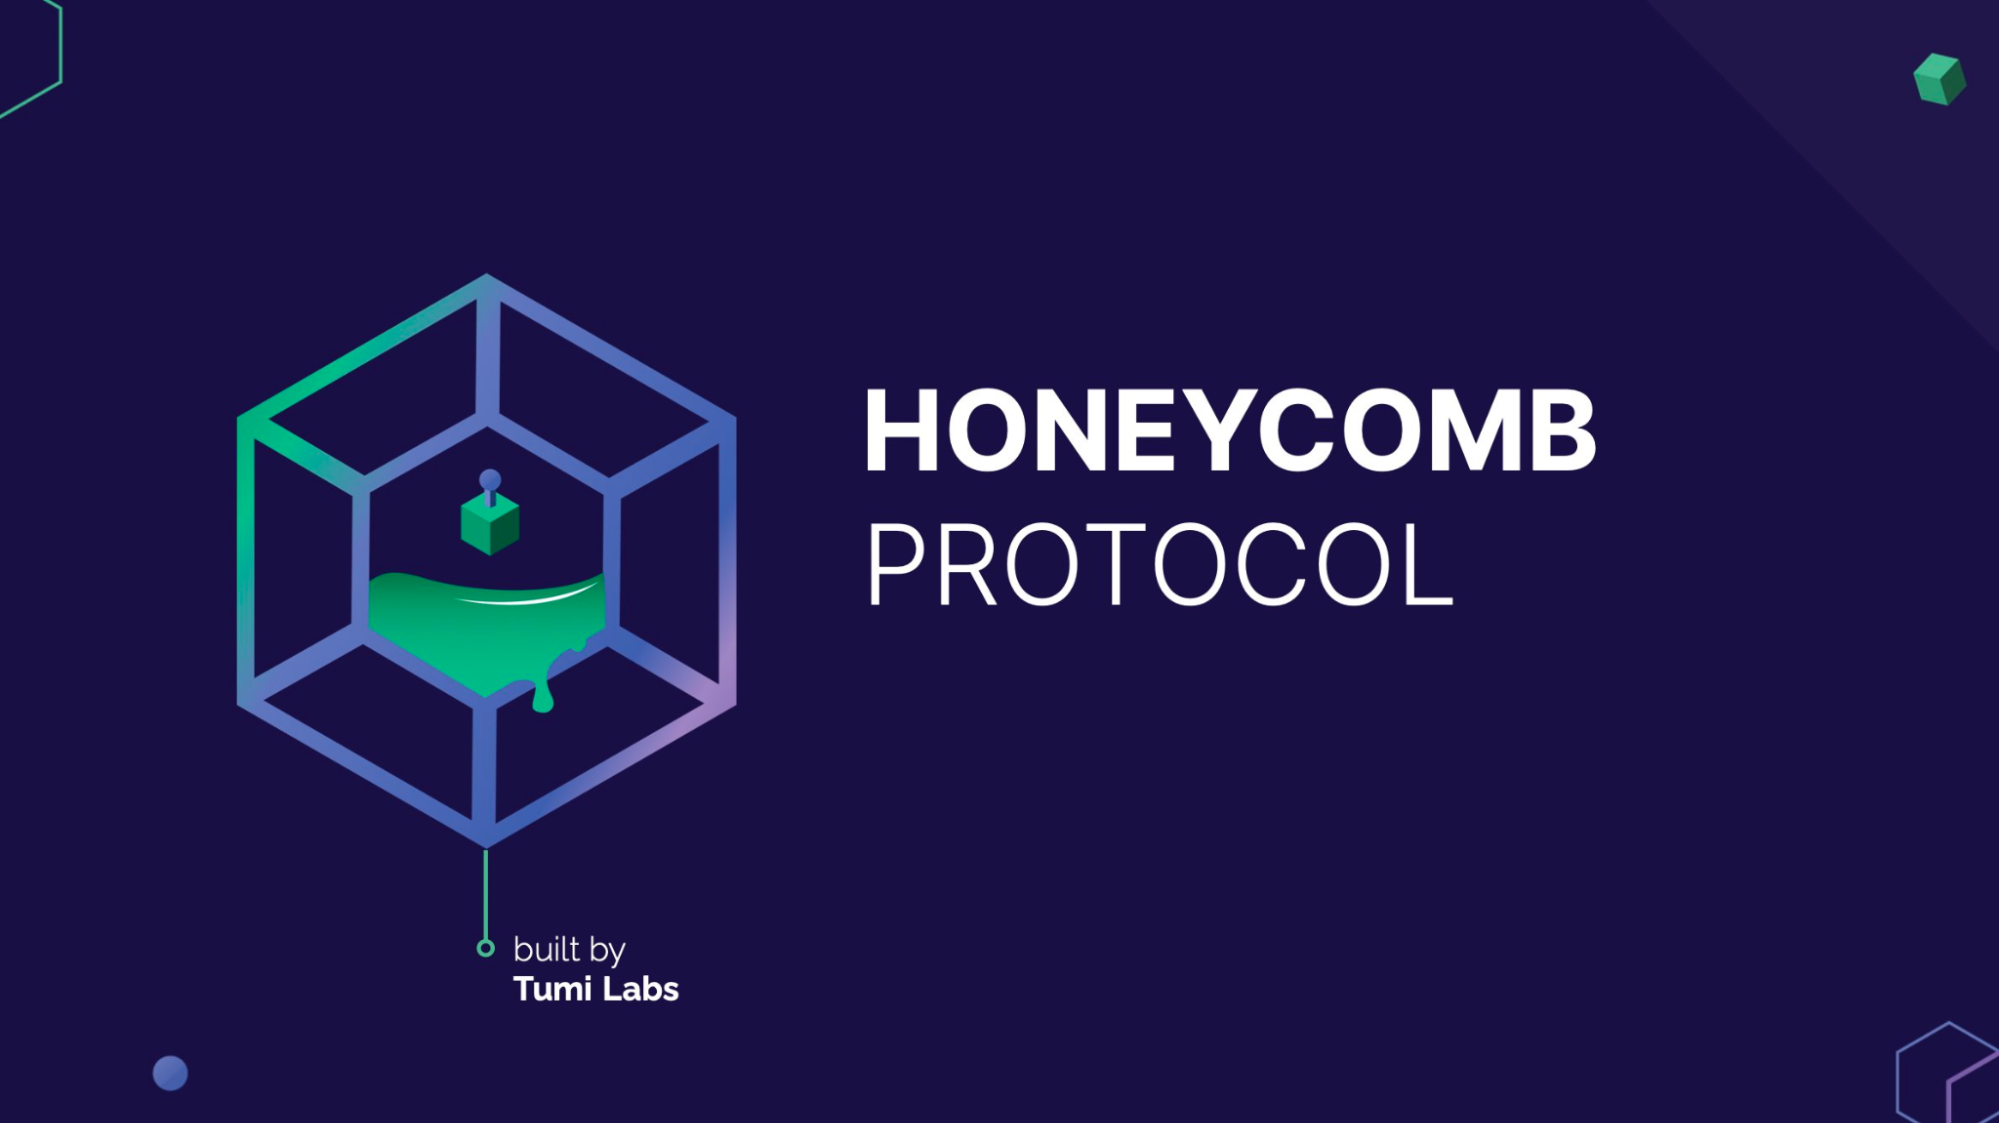 The cool Honeycomb logo.